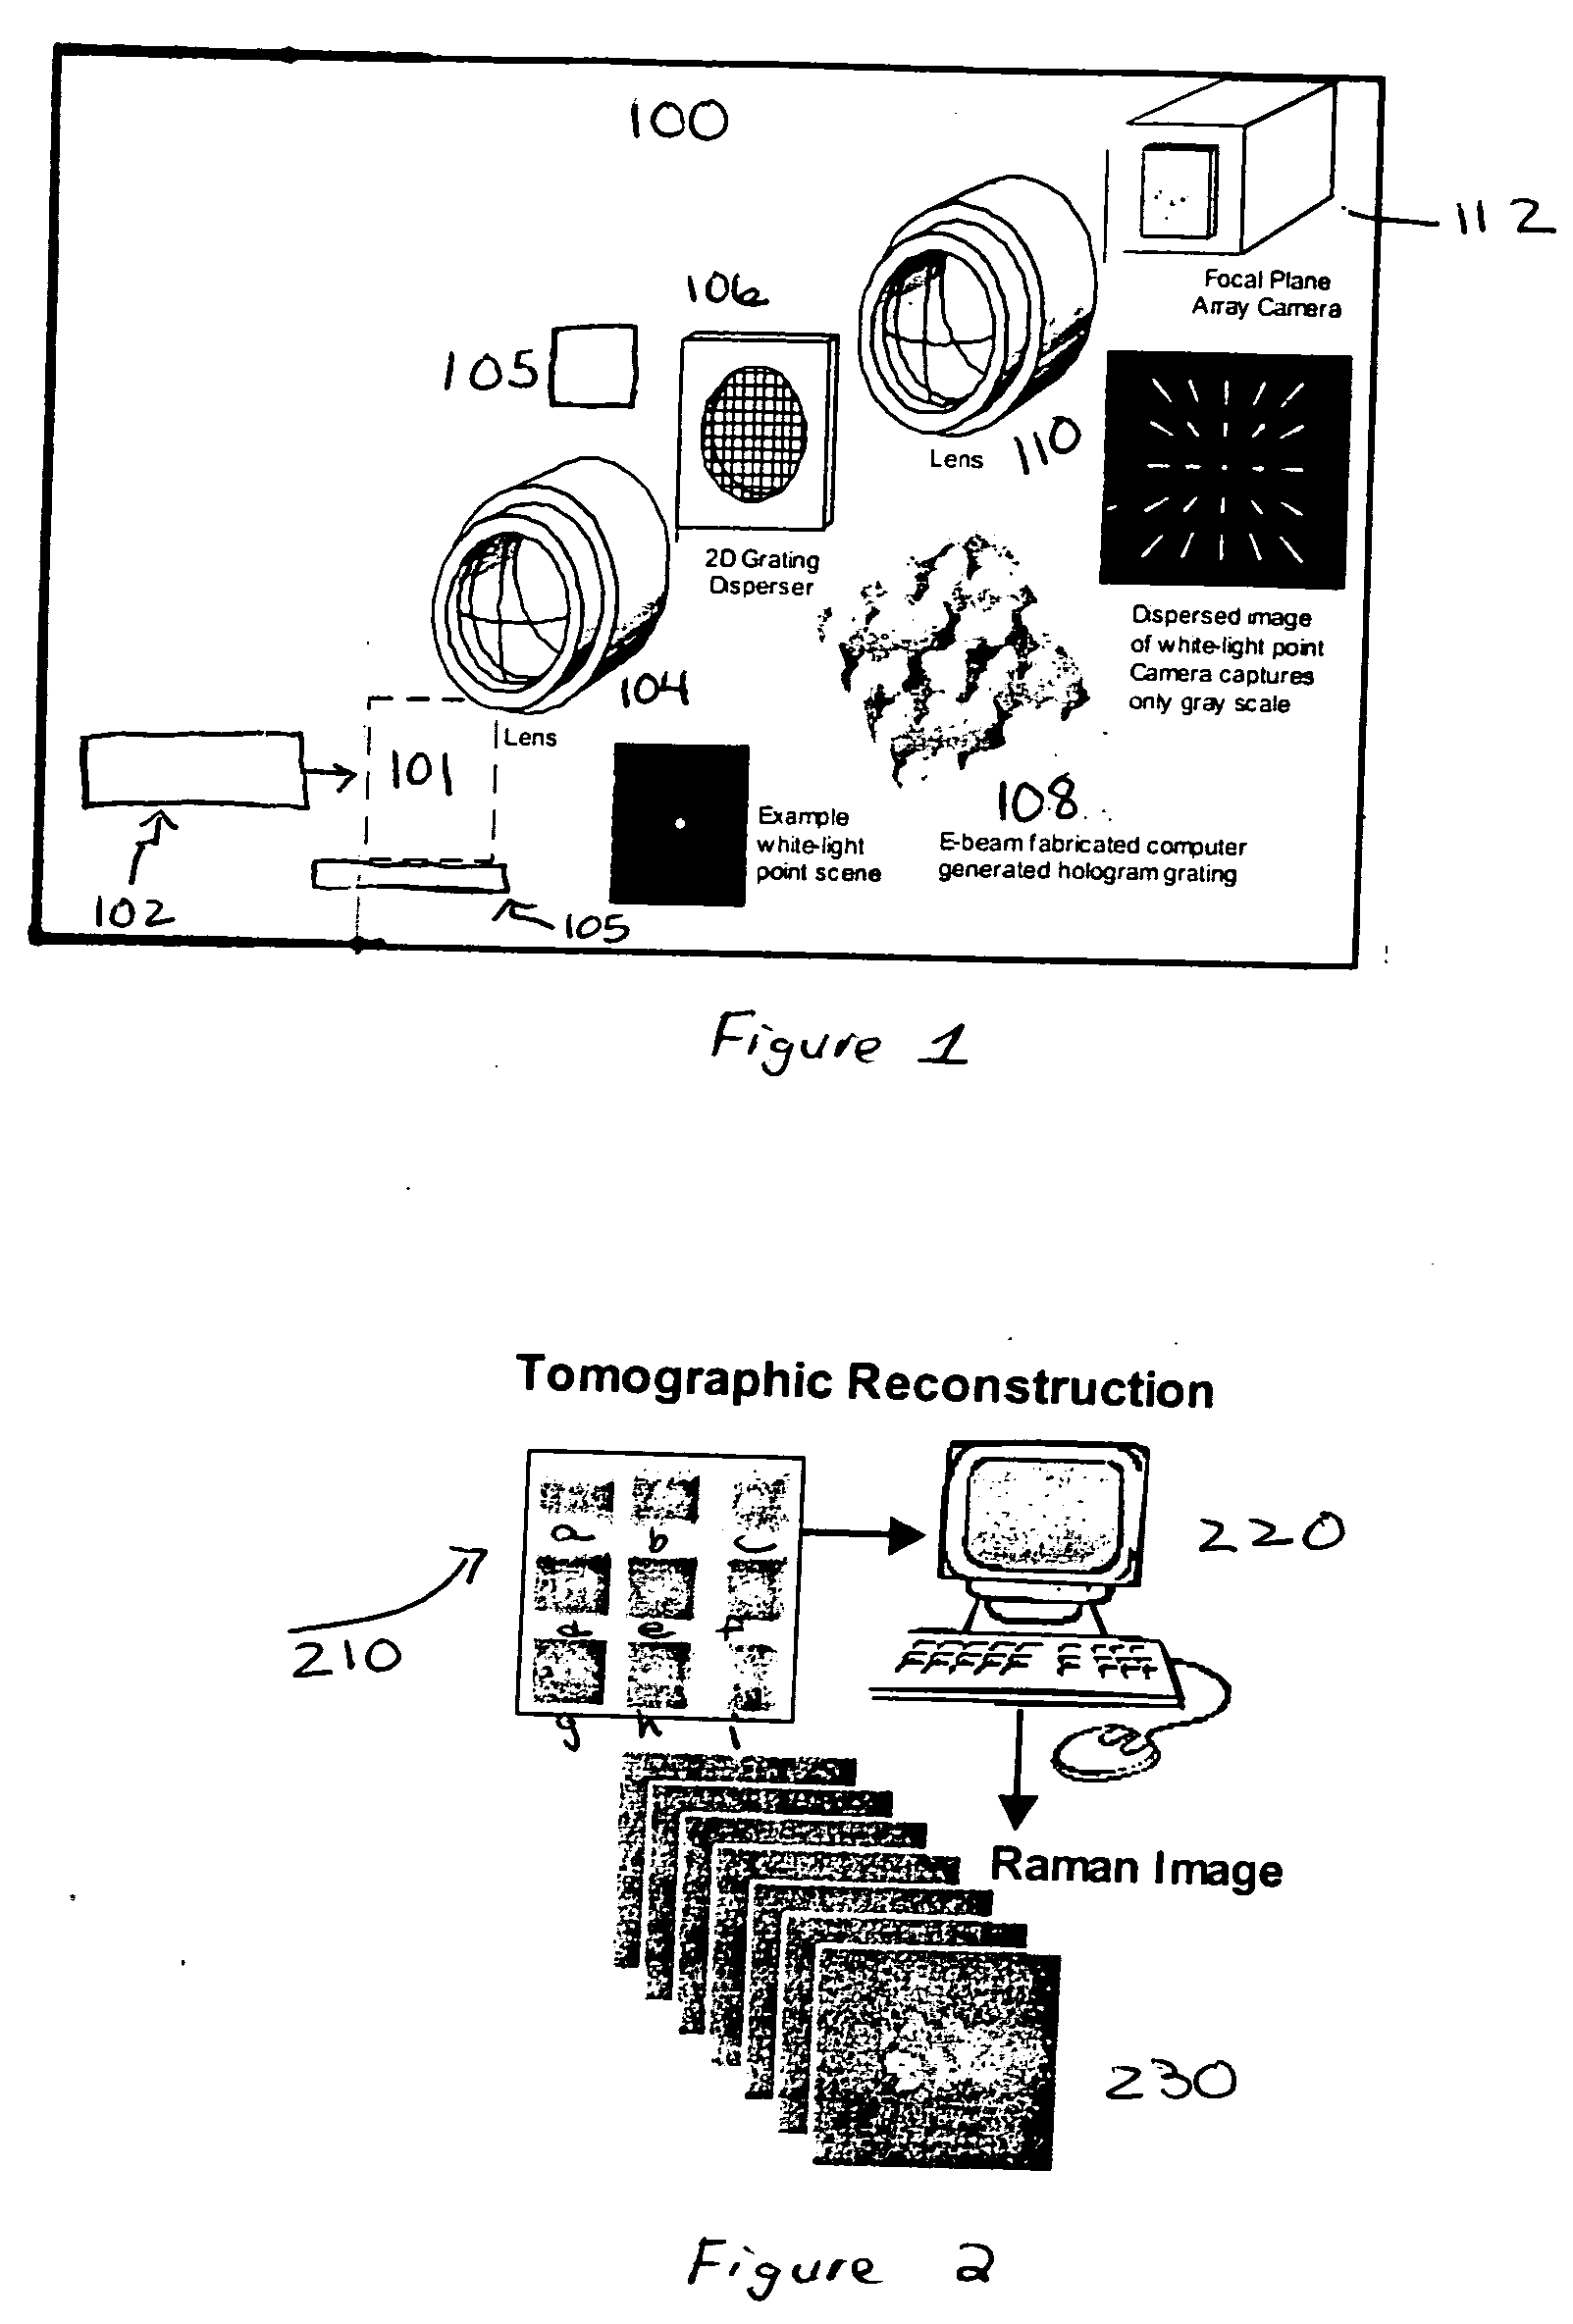 Method for Raman computer tomography imaging spectroscopy